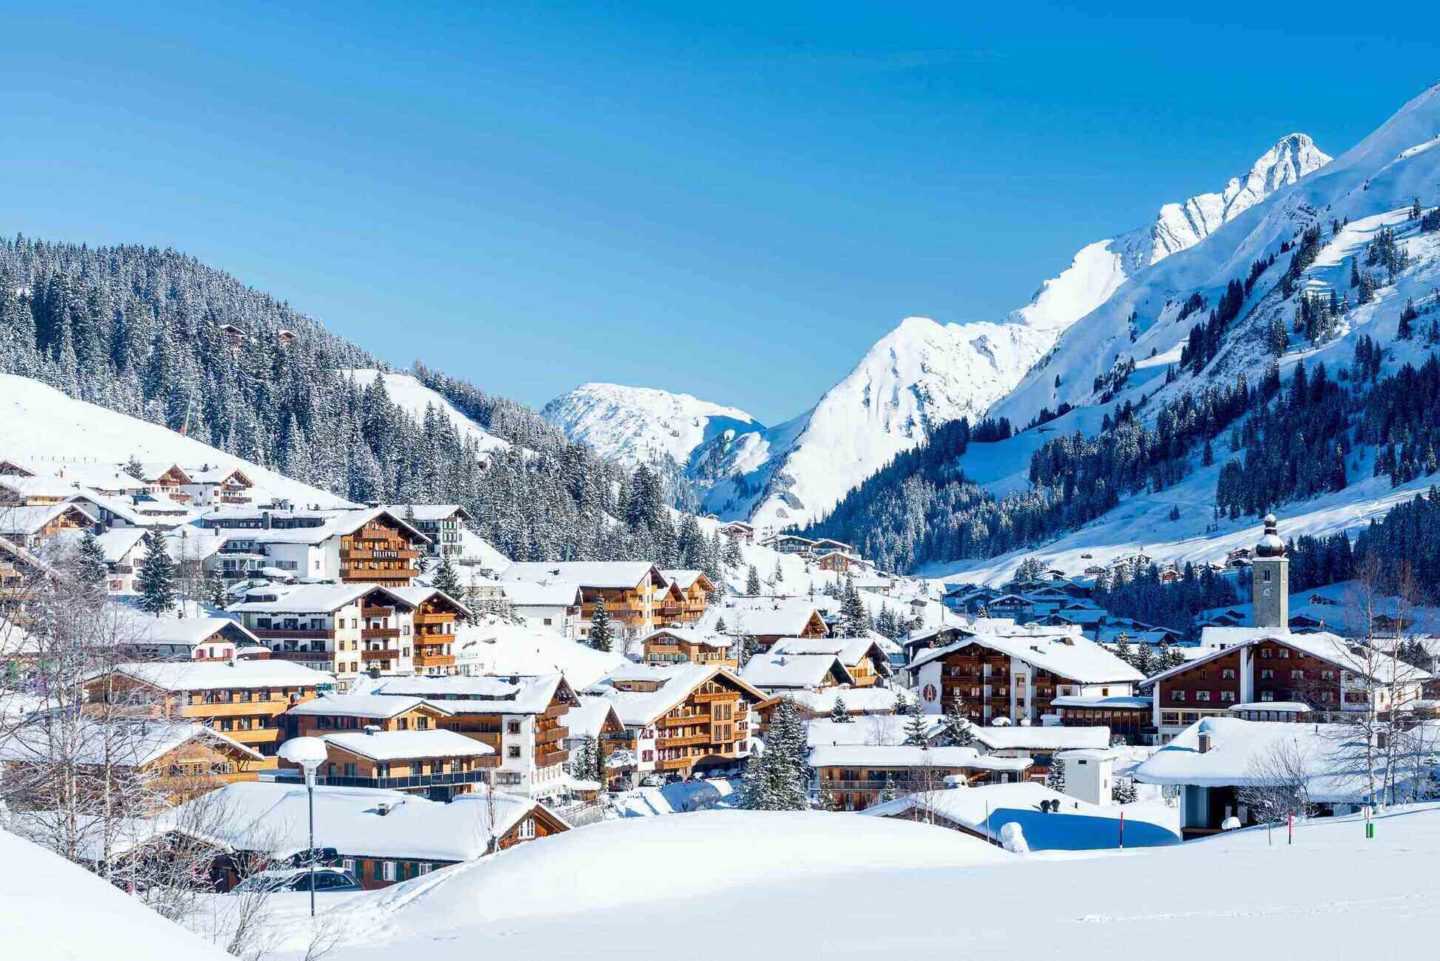 Luxury Ski Resorts in Europe - Europe's Best Destinations